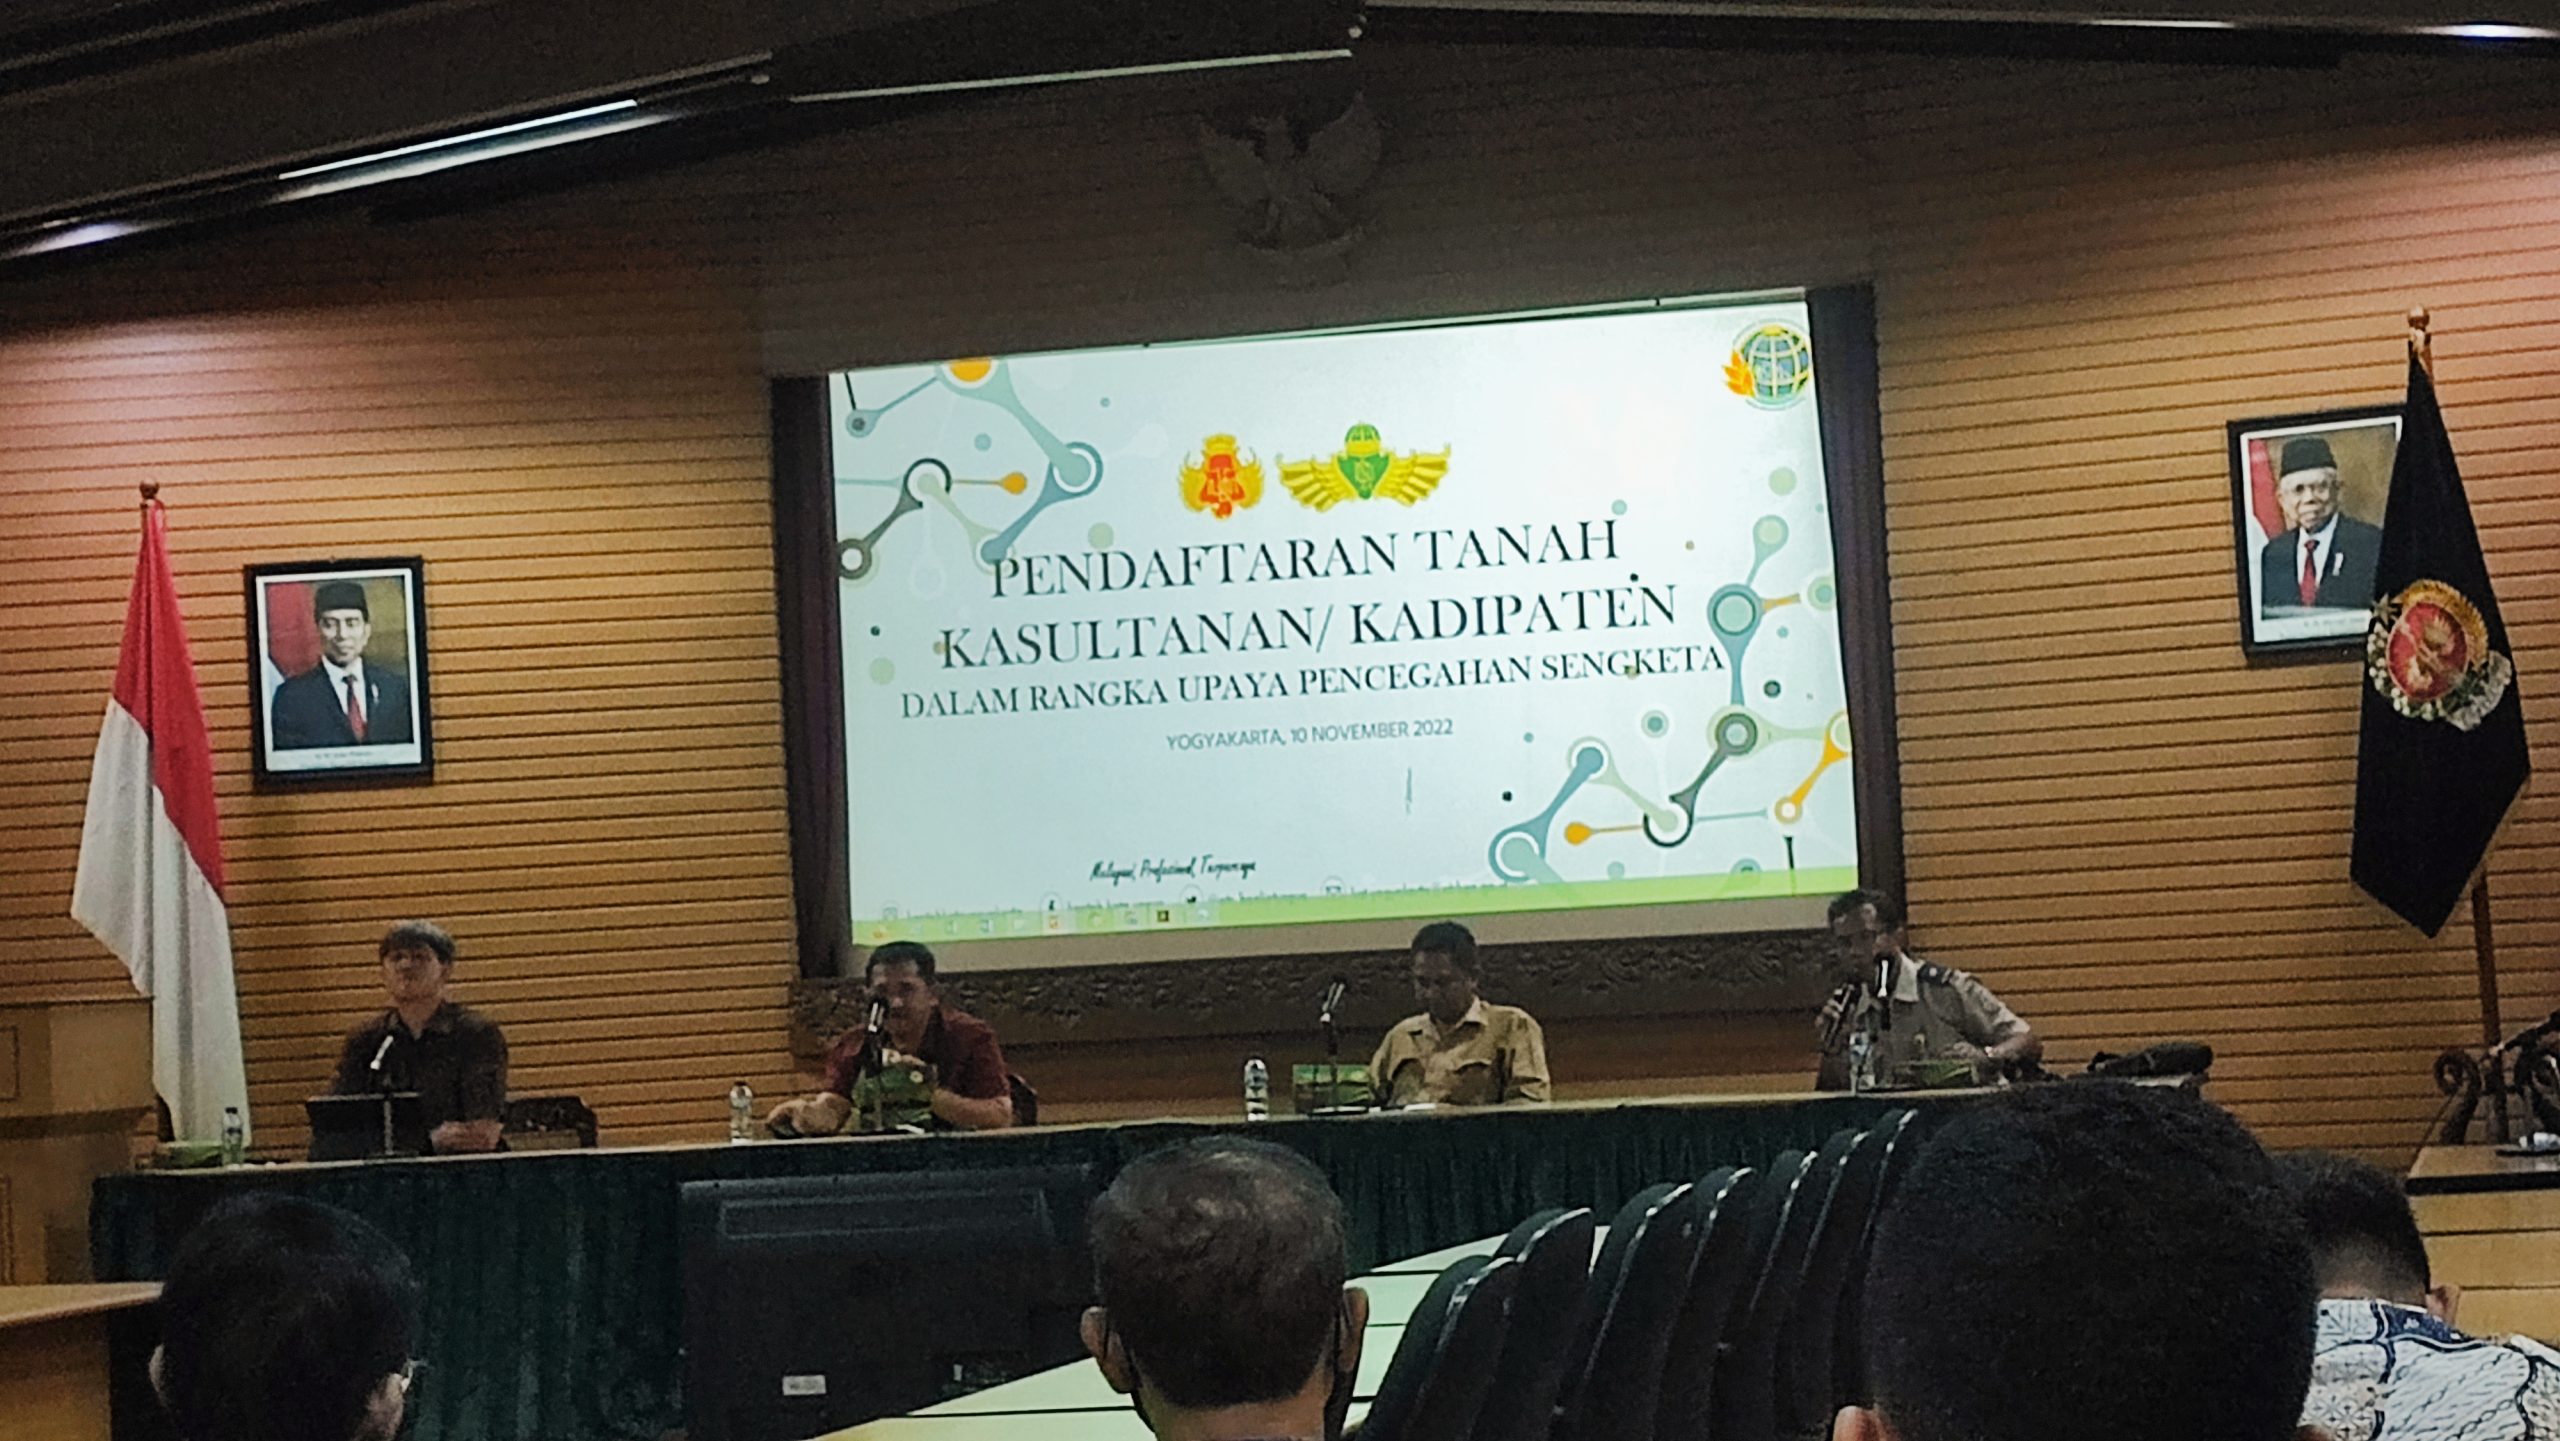 Sosialisasi Pemanfaatan Tanah Kasultanan, Tanah Kadipaten, dan Tanah Kalurahan di Jogja (foto: Deny Hermawan)